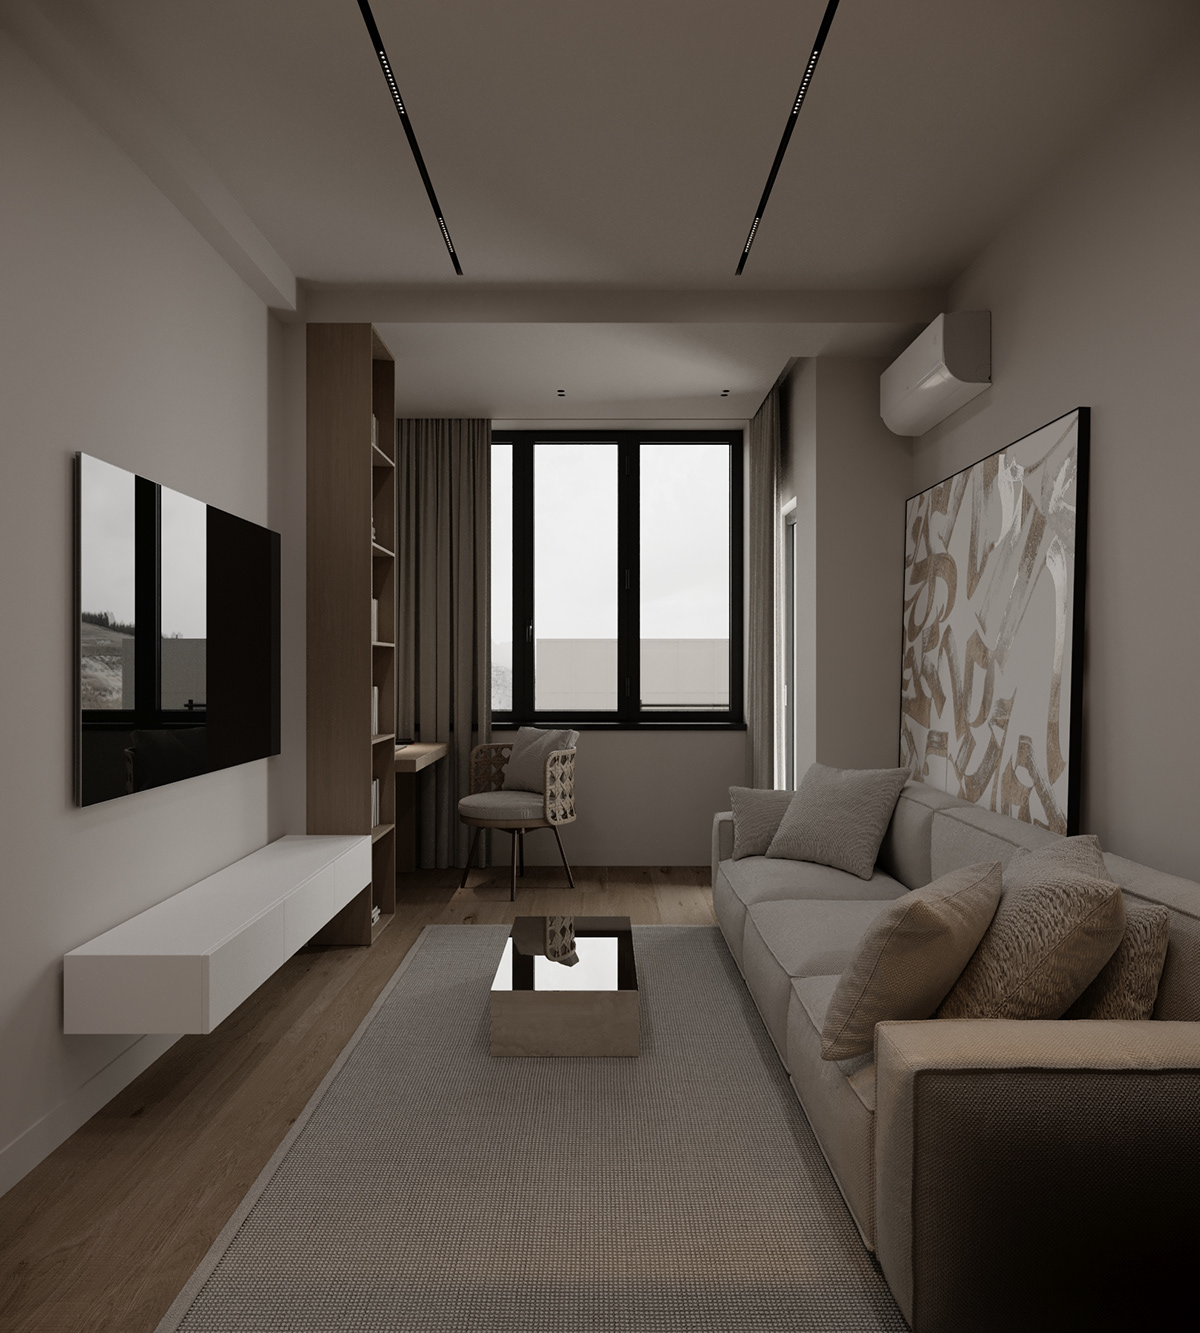 design interior дизайн интерьера visualization 3ds max corona architecture 3D Render interior design 